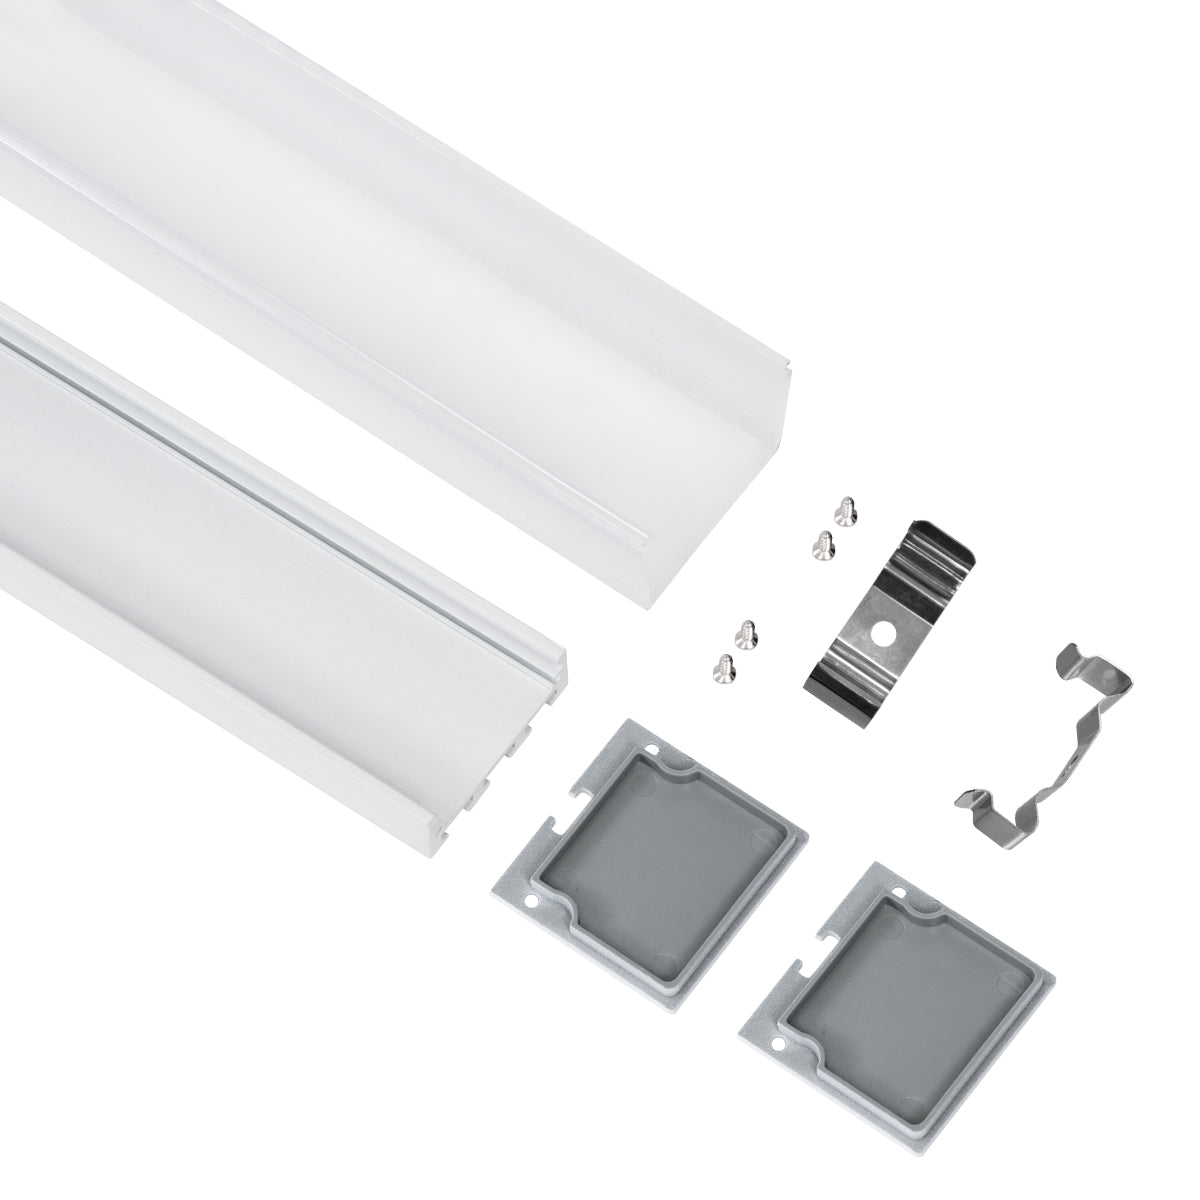 GloboStar® 70865-3M Επιφανειακό Προφίλ Αλουμινίου Λευκό με Λευκό Οπάλ Κάλυμμα για έως 3 Σειρές Ταινίας LED Πατητό - Press On 3 Μέτρα